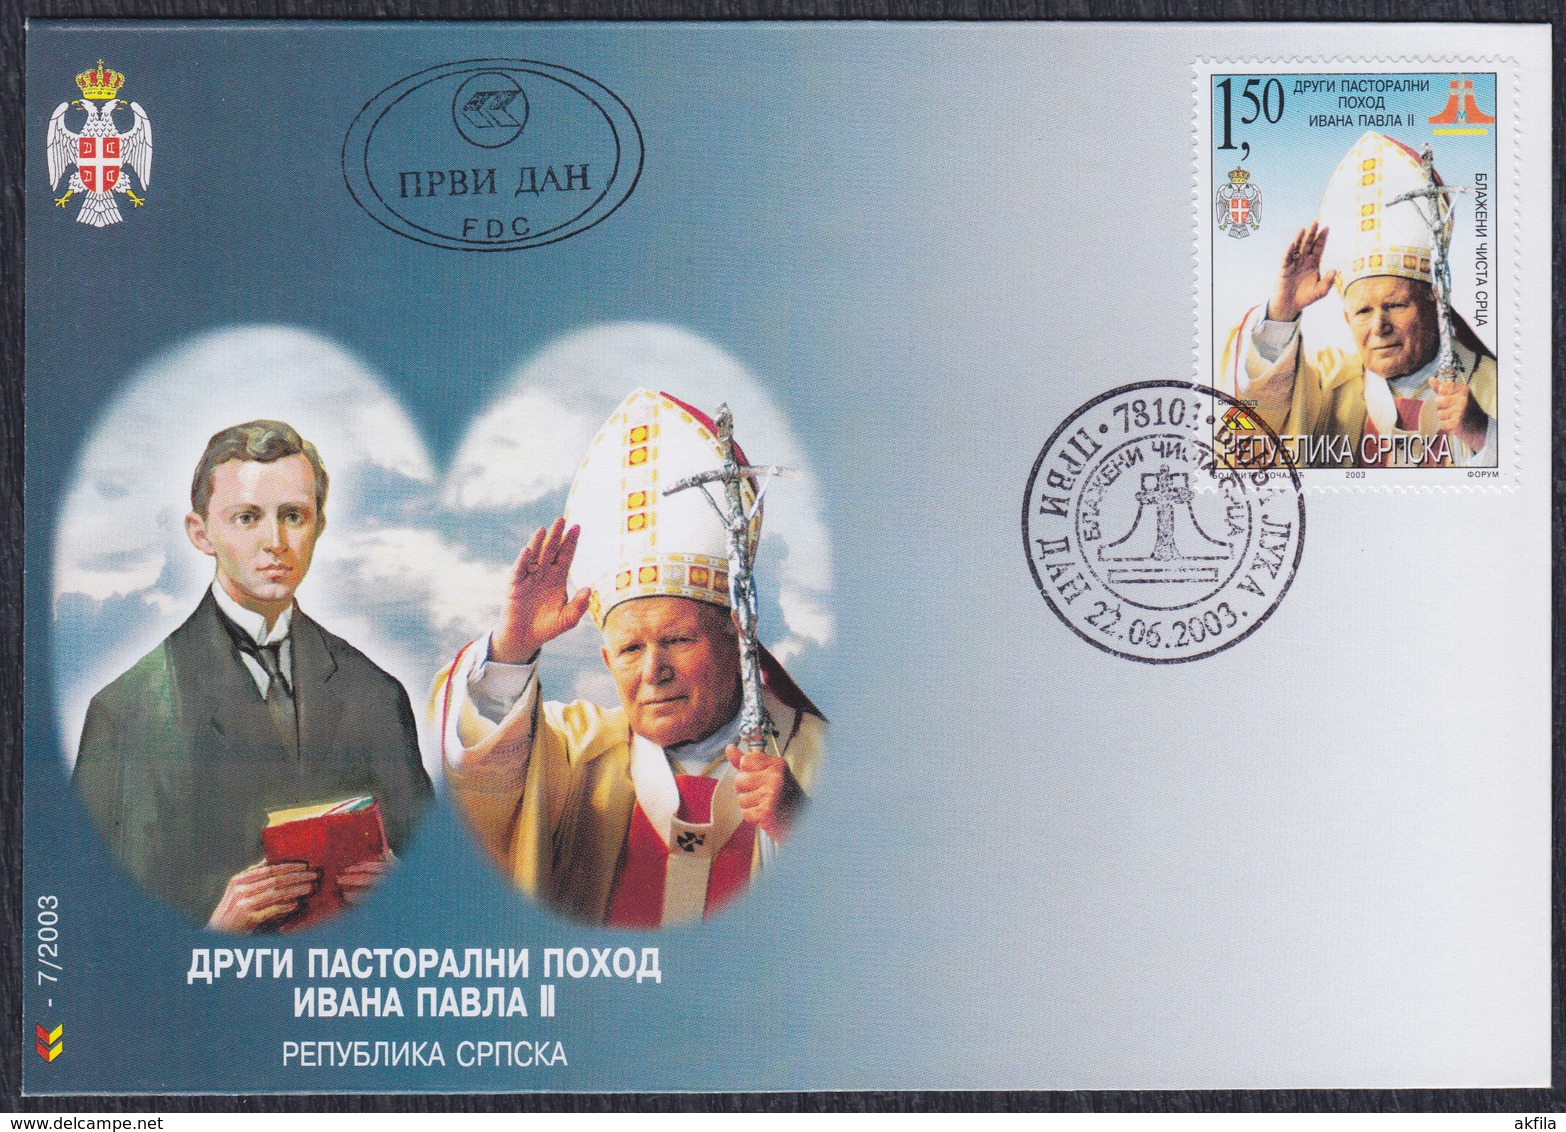 Bosnia Republic Of Srpska 2003 Pope John Paul II, FDC (First Day Cover) Michel 277 - Bosnia And Herzegovina